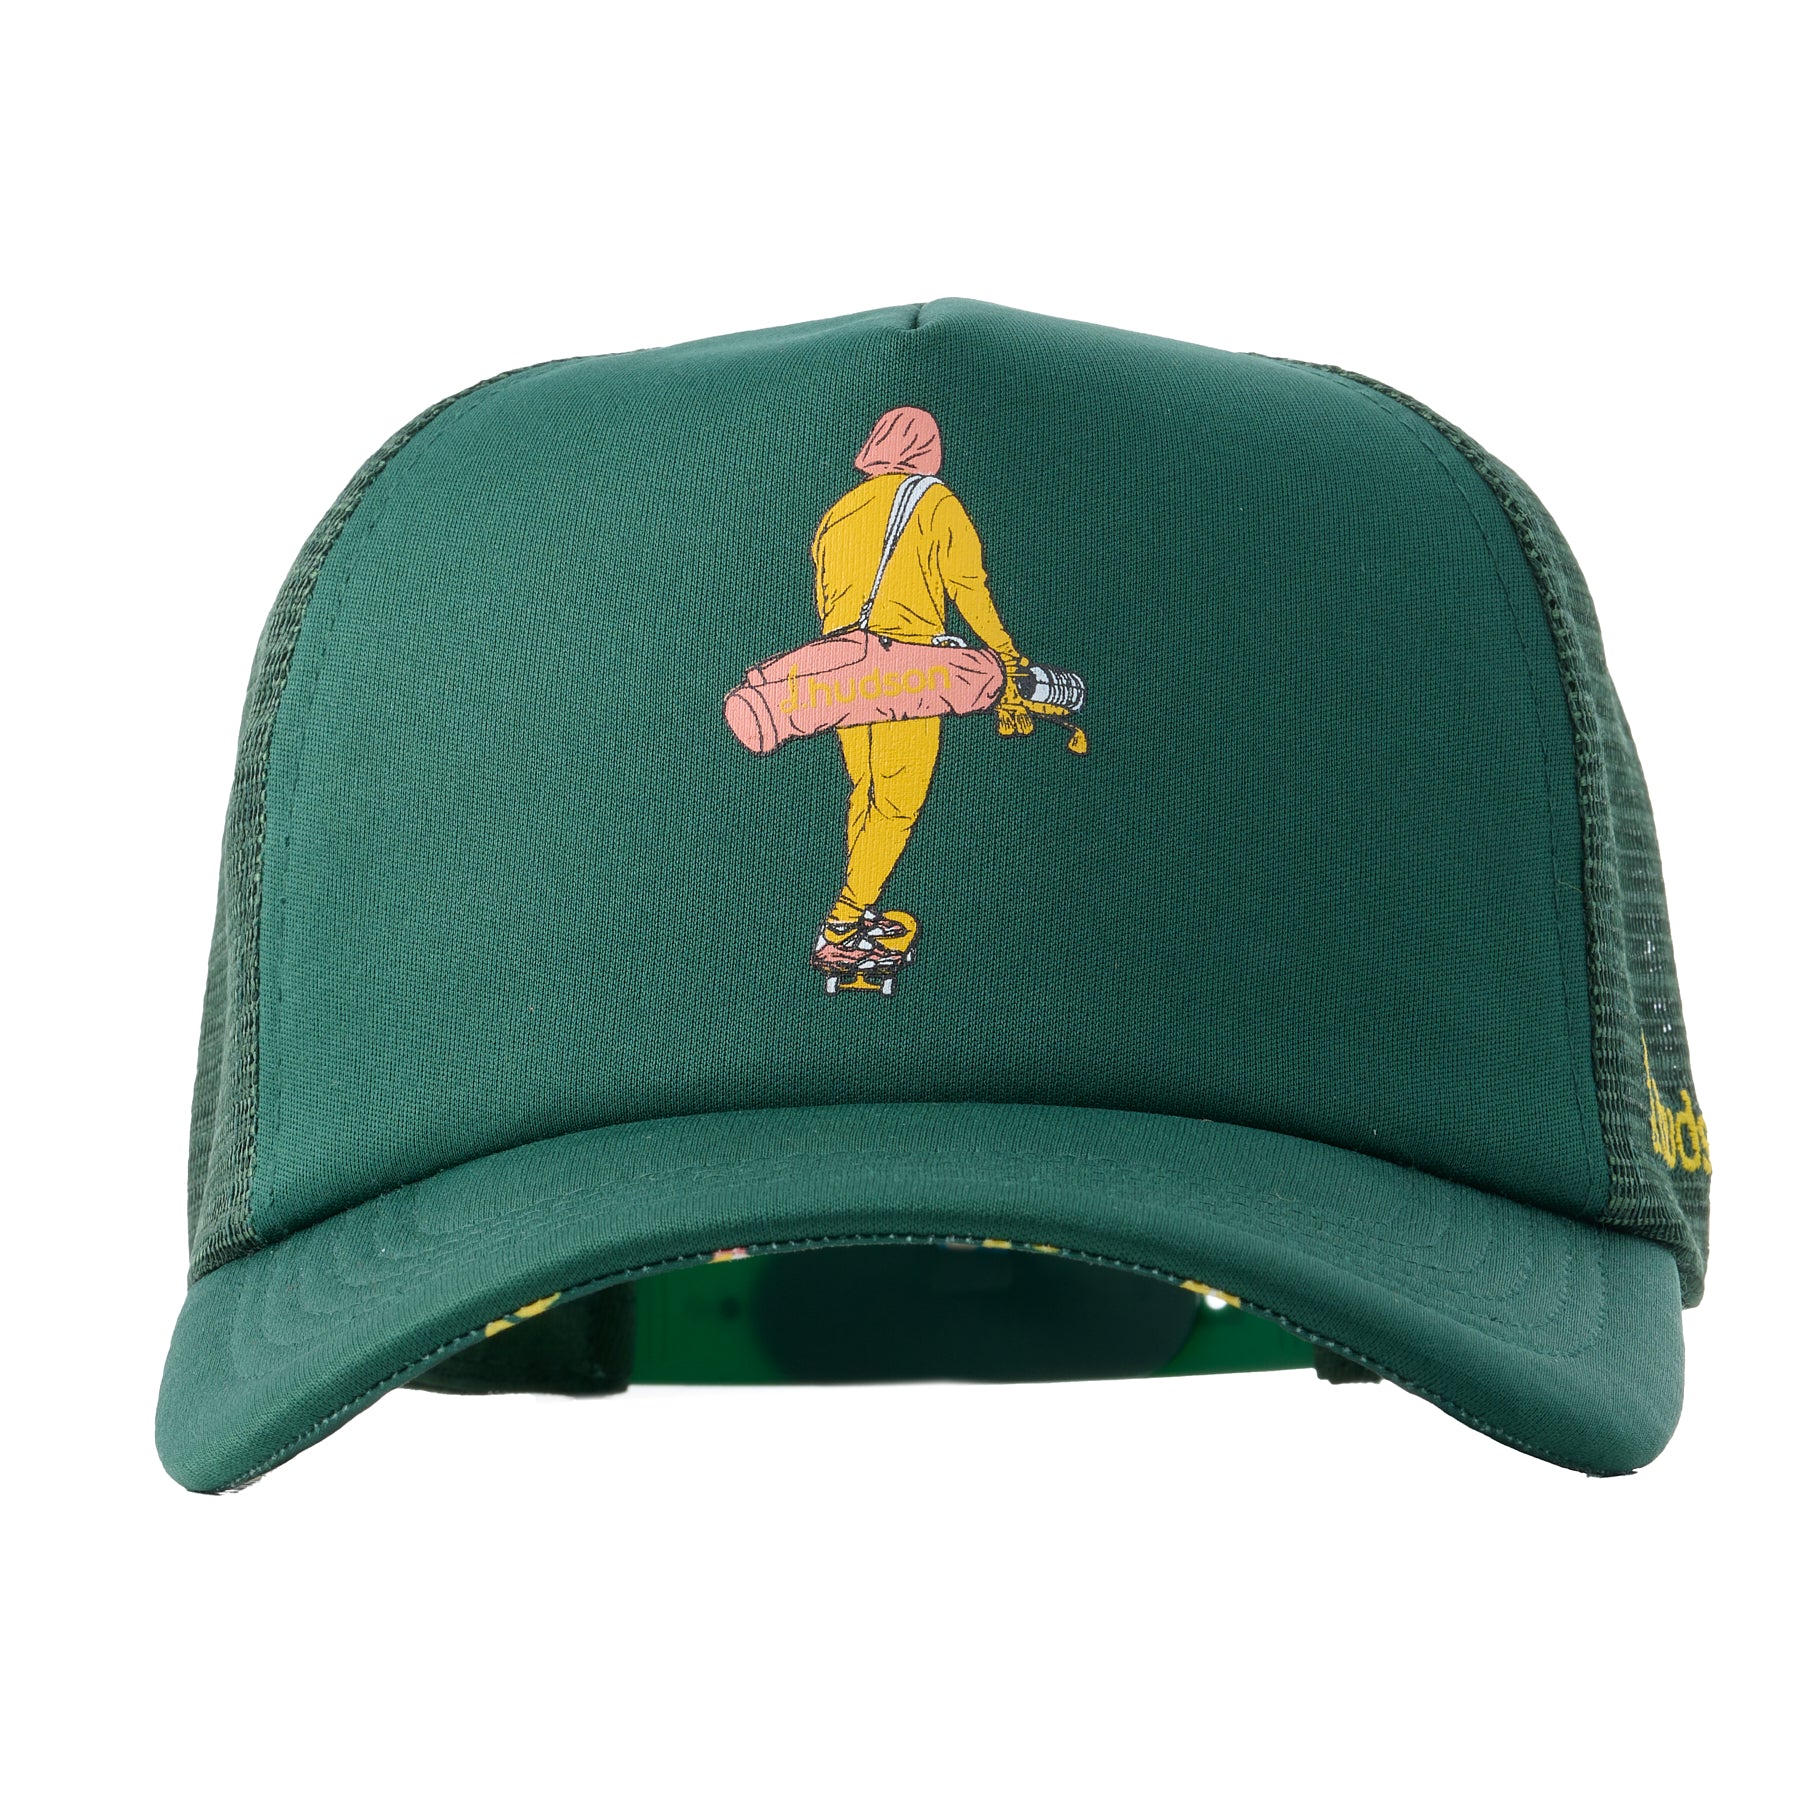 Semi Pro Trucker Hat (Forest Green/Mustard) – d.hudson Golfwear, LLC